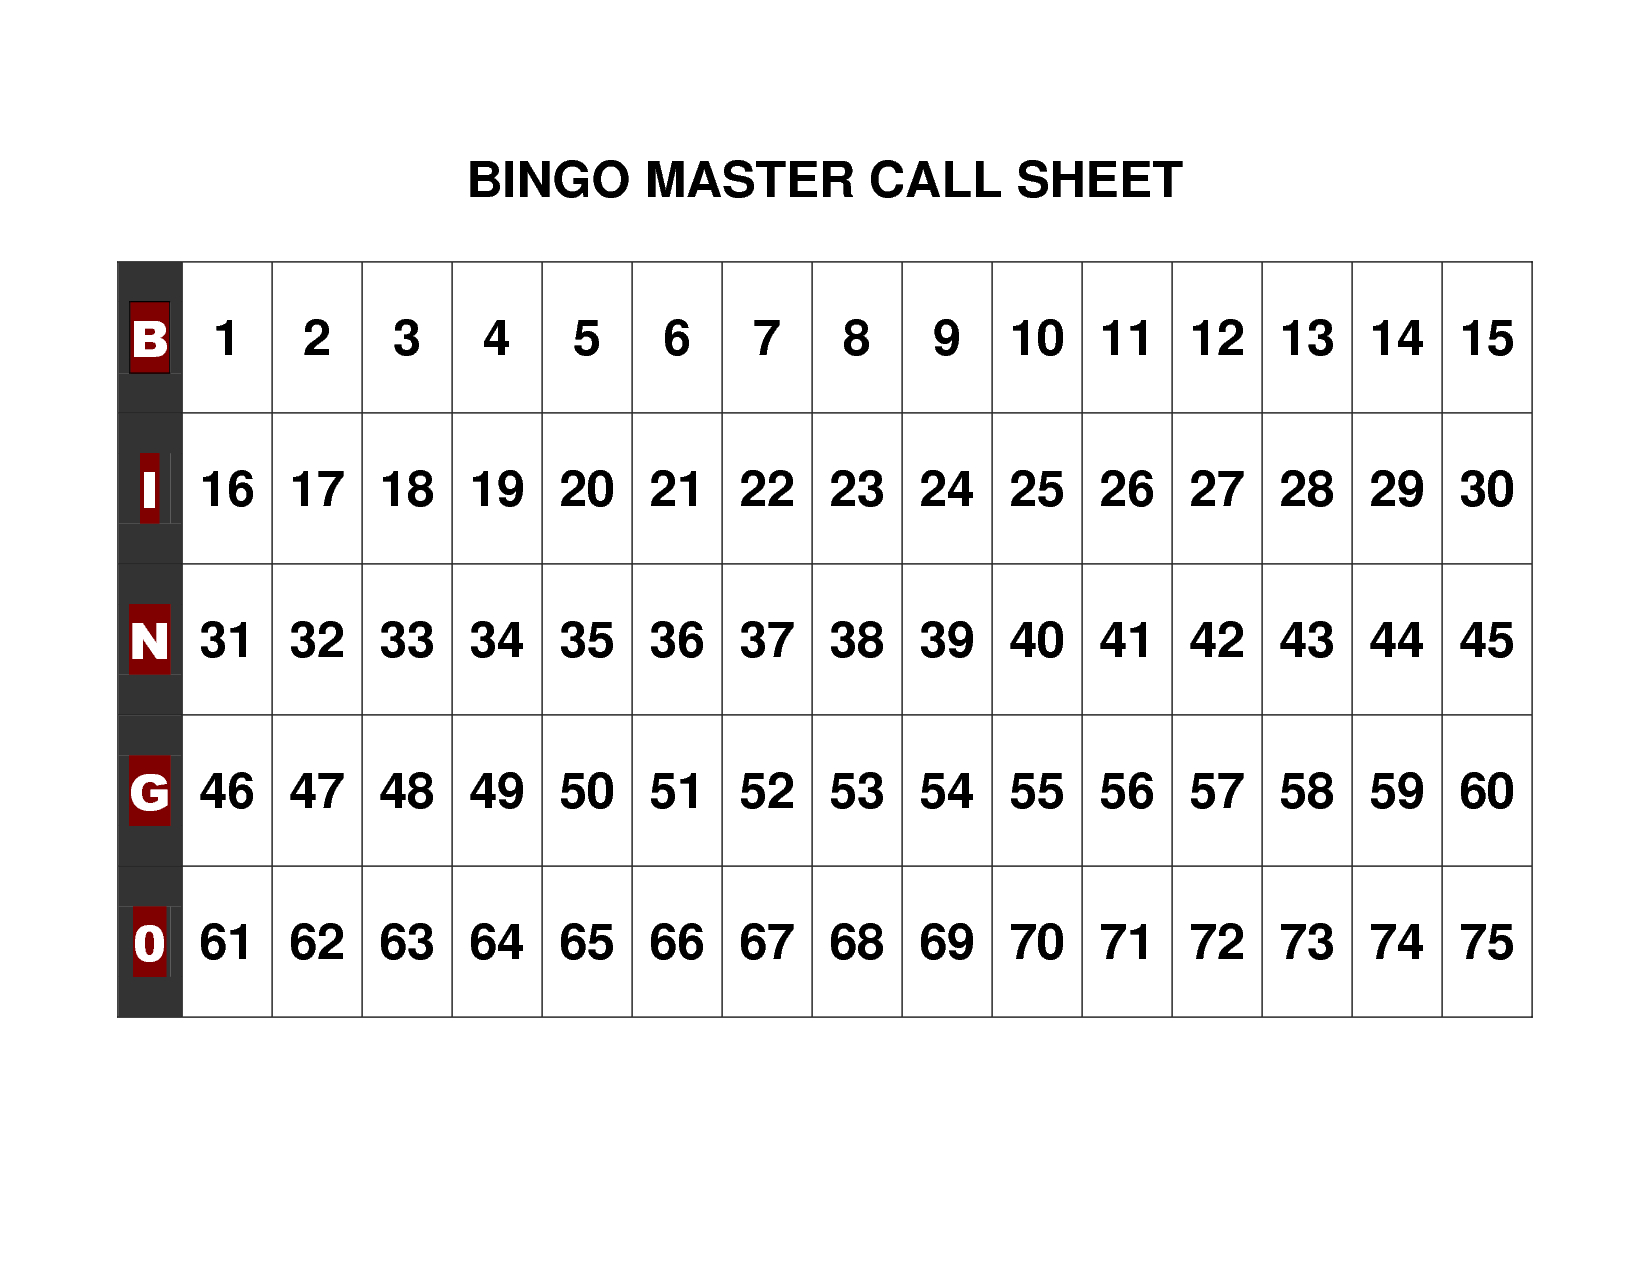 Free+Printable+Bingo+Call+Sheet | Bingo | Pinterest | Bingo, Bingo - Free Printable Bingo Cards And Call Sheet